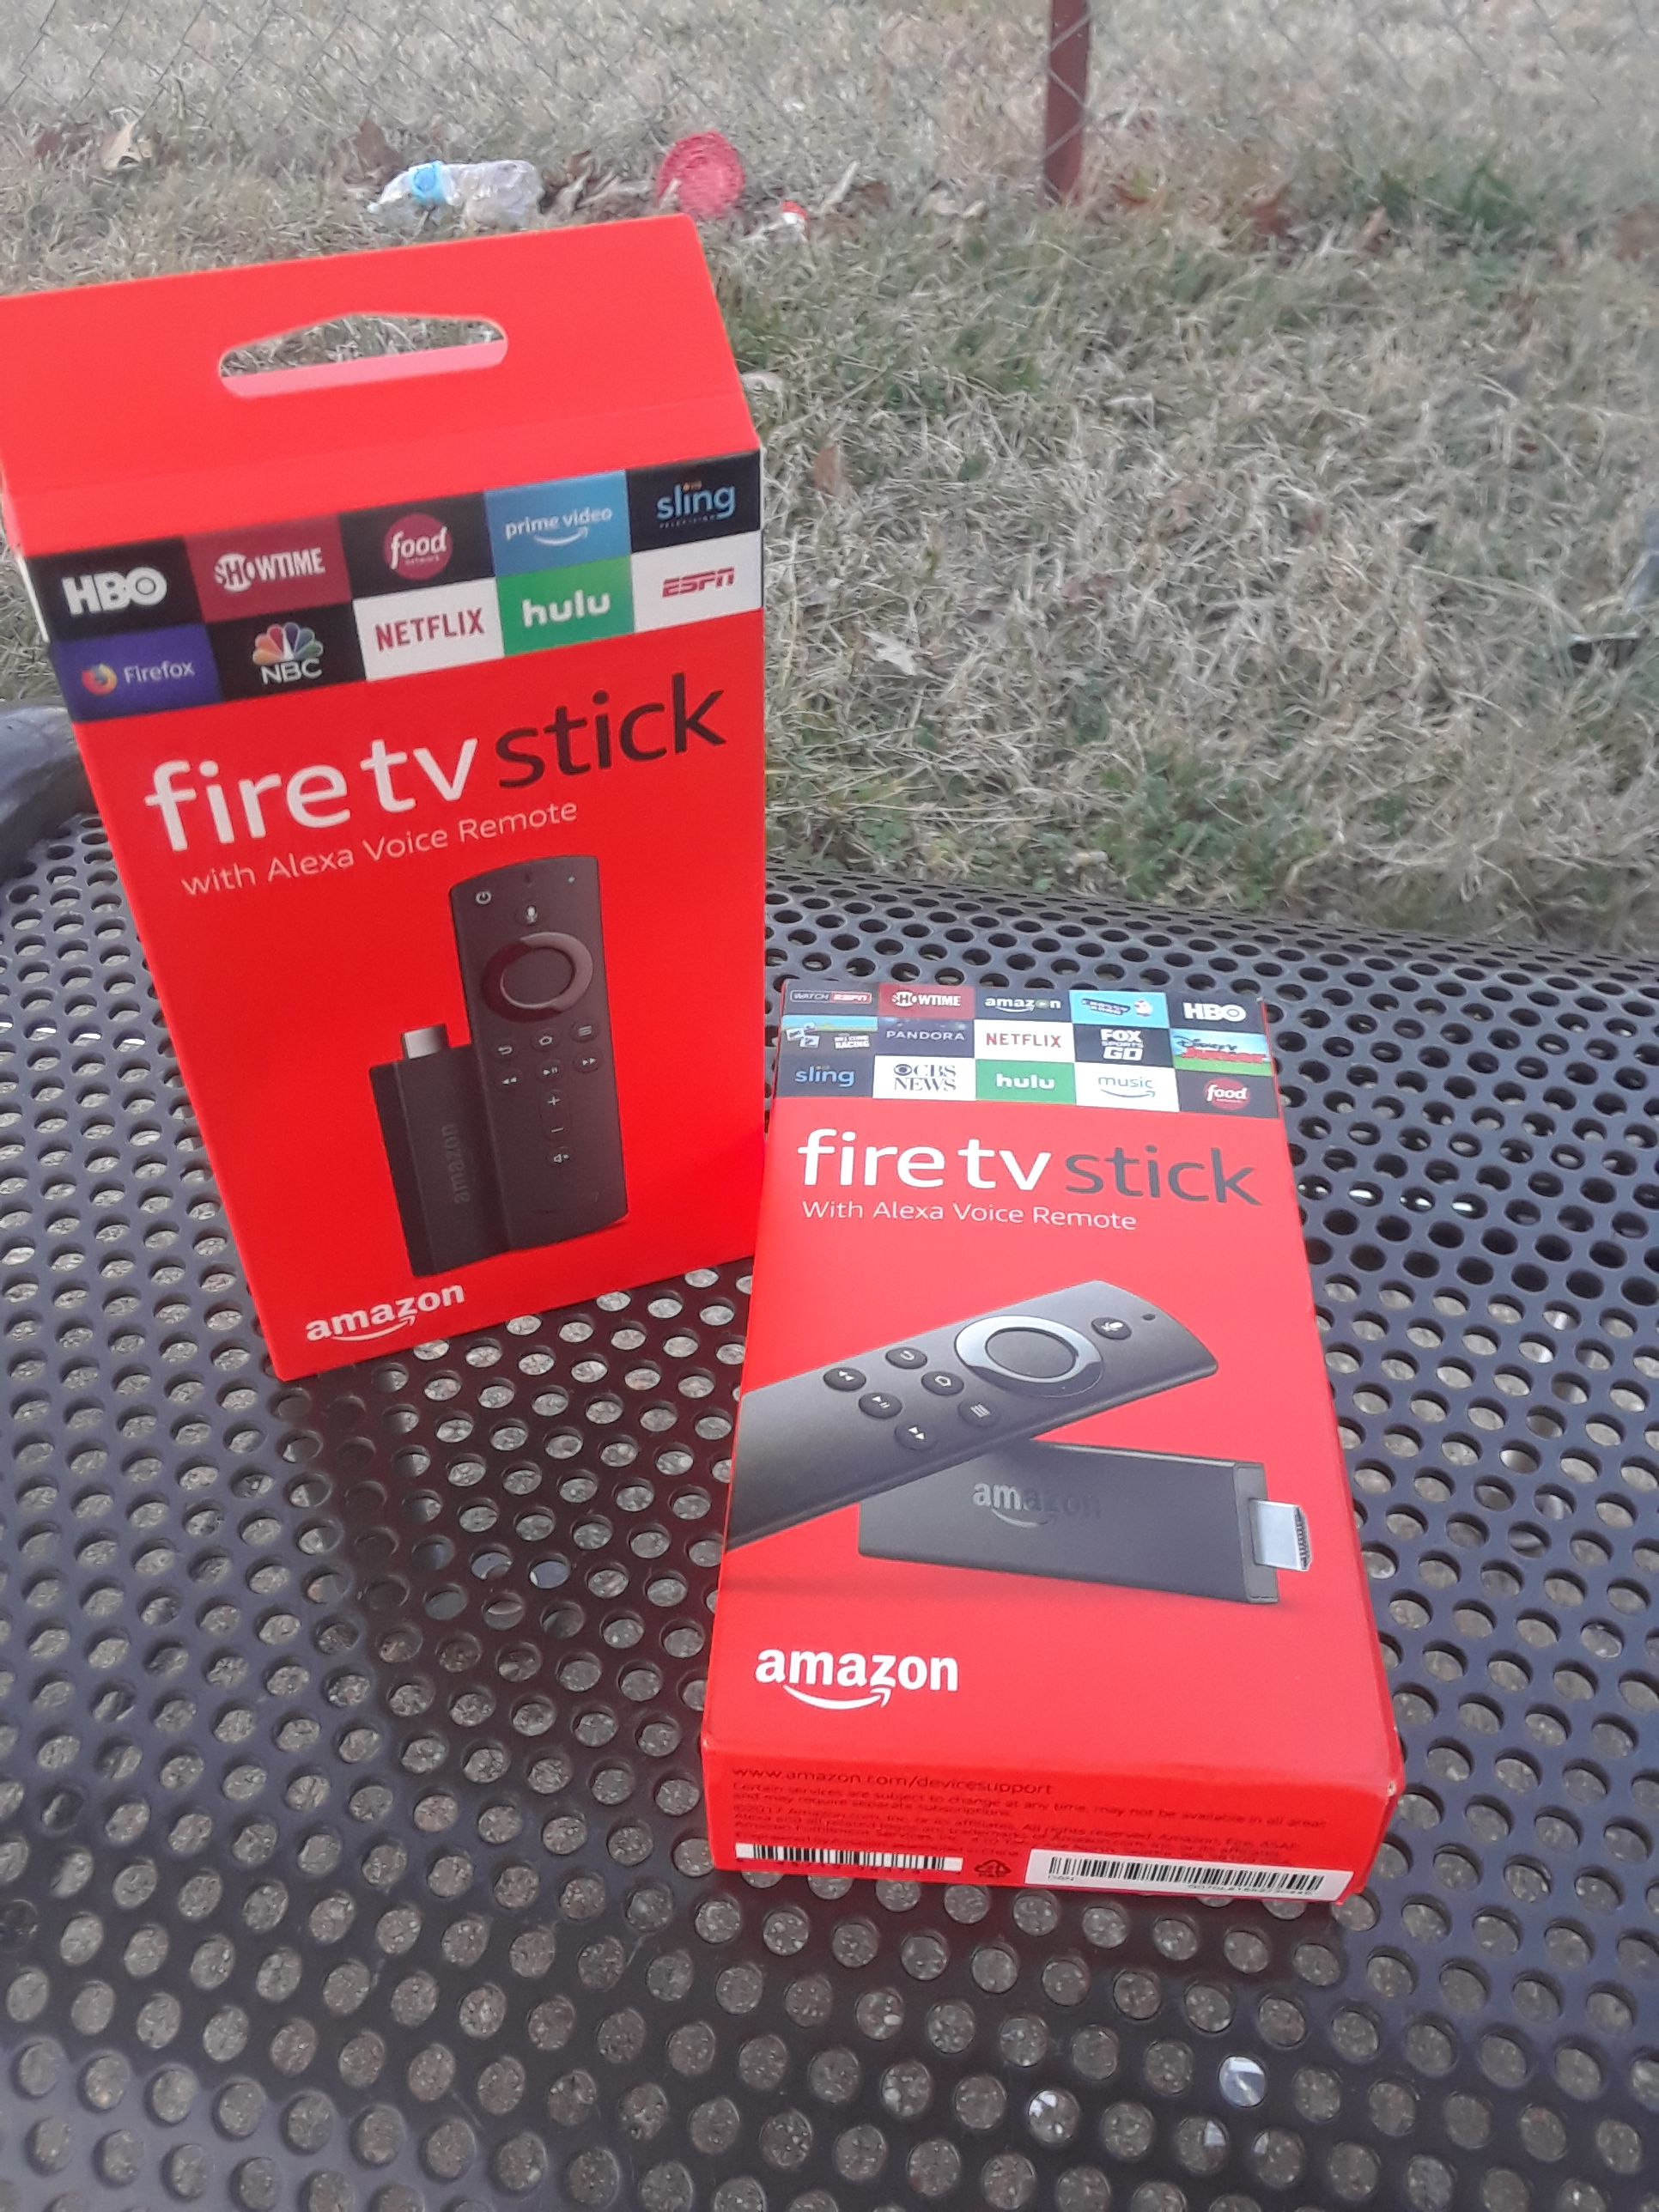 TWO Jailbroken Amazon Fire TV Sticks